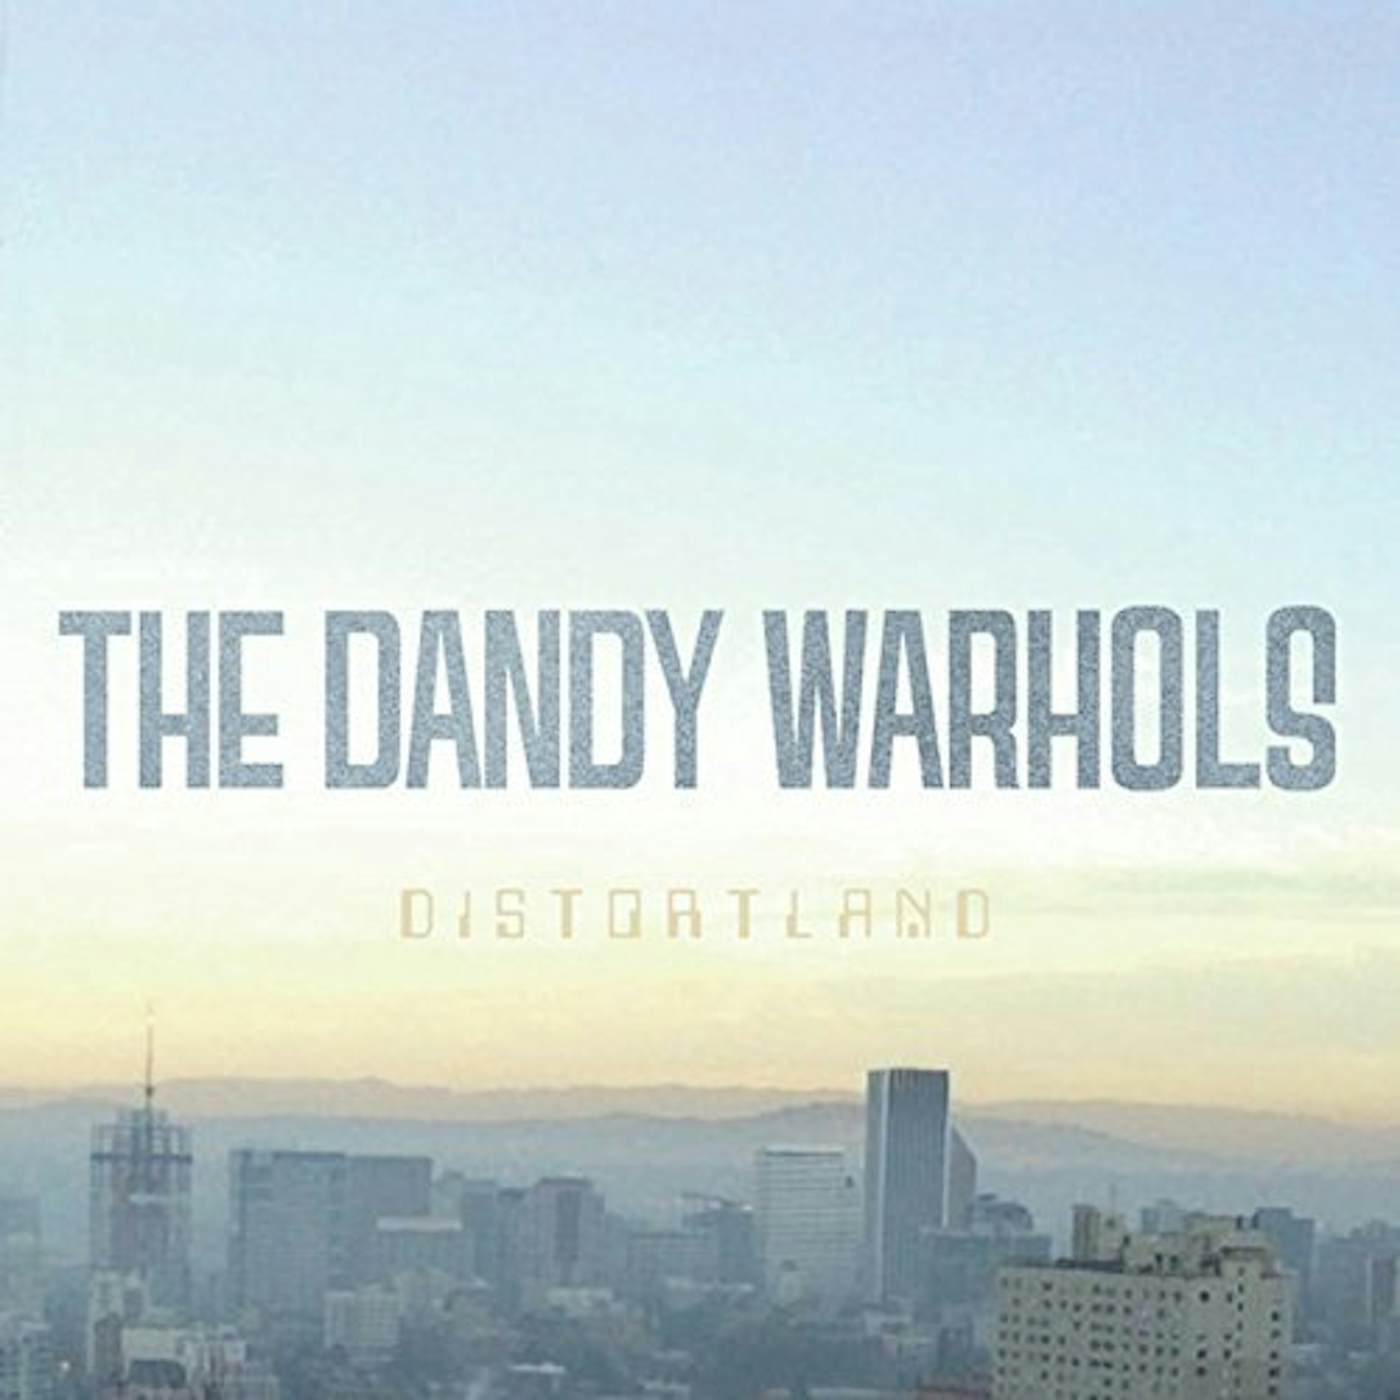 The Dandy Warhols Distortland Vinyl Record